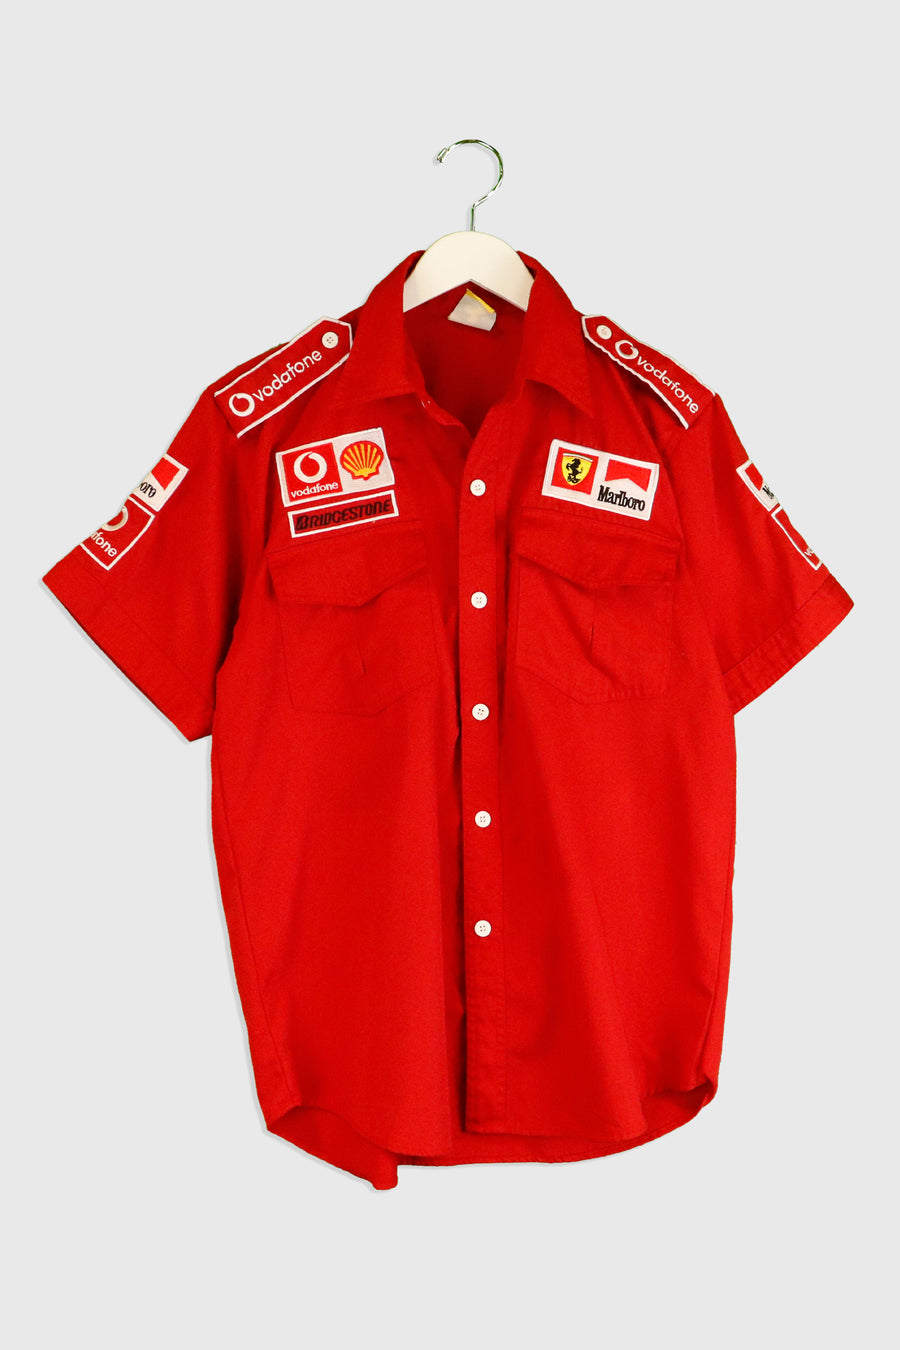 Vintage Ferrari Marlboro Sponsor Button Up T Shirt Sz M